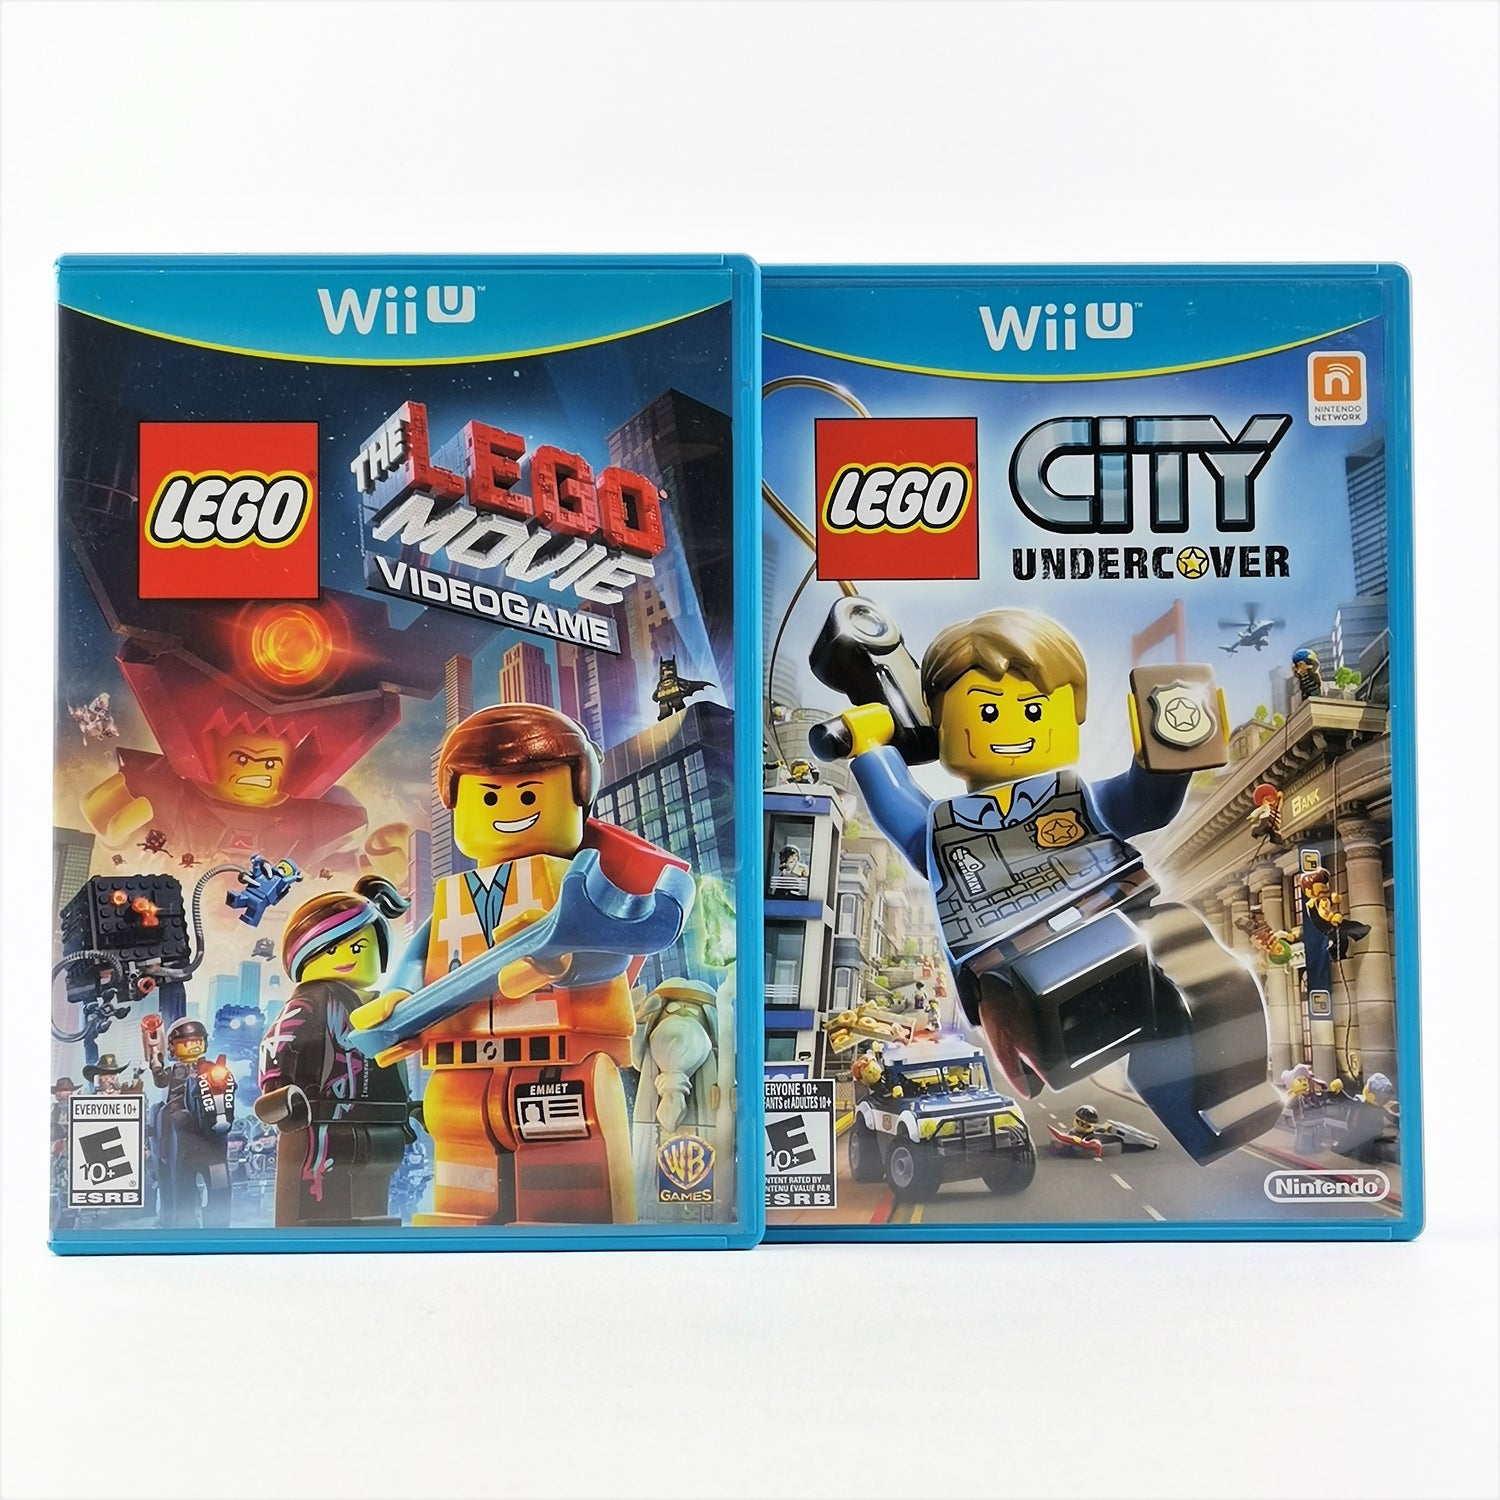 Nintendo Wii U Spiele : Lego The Movie & Lego City Undercover - OVP Anleitung